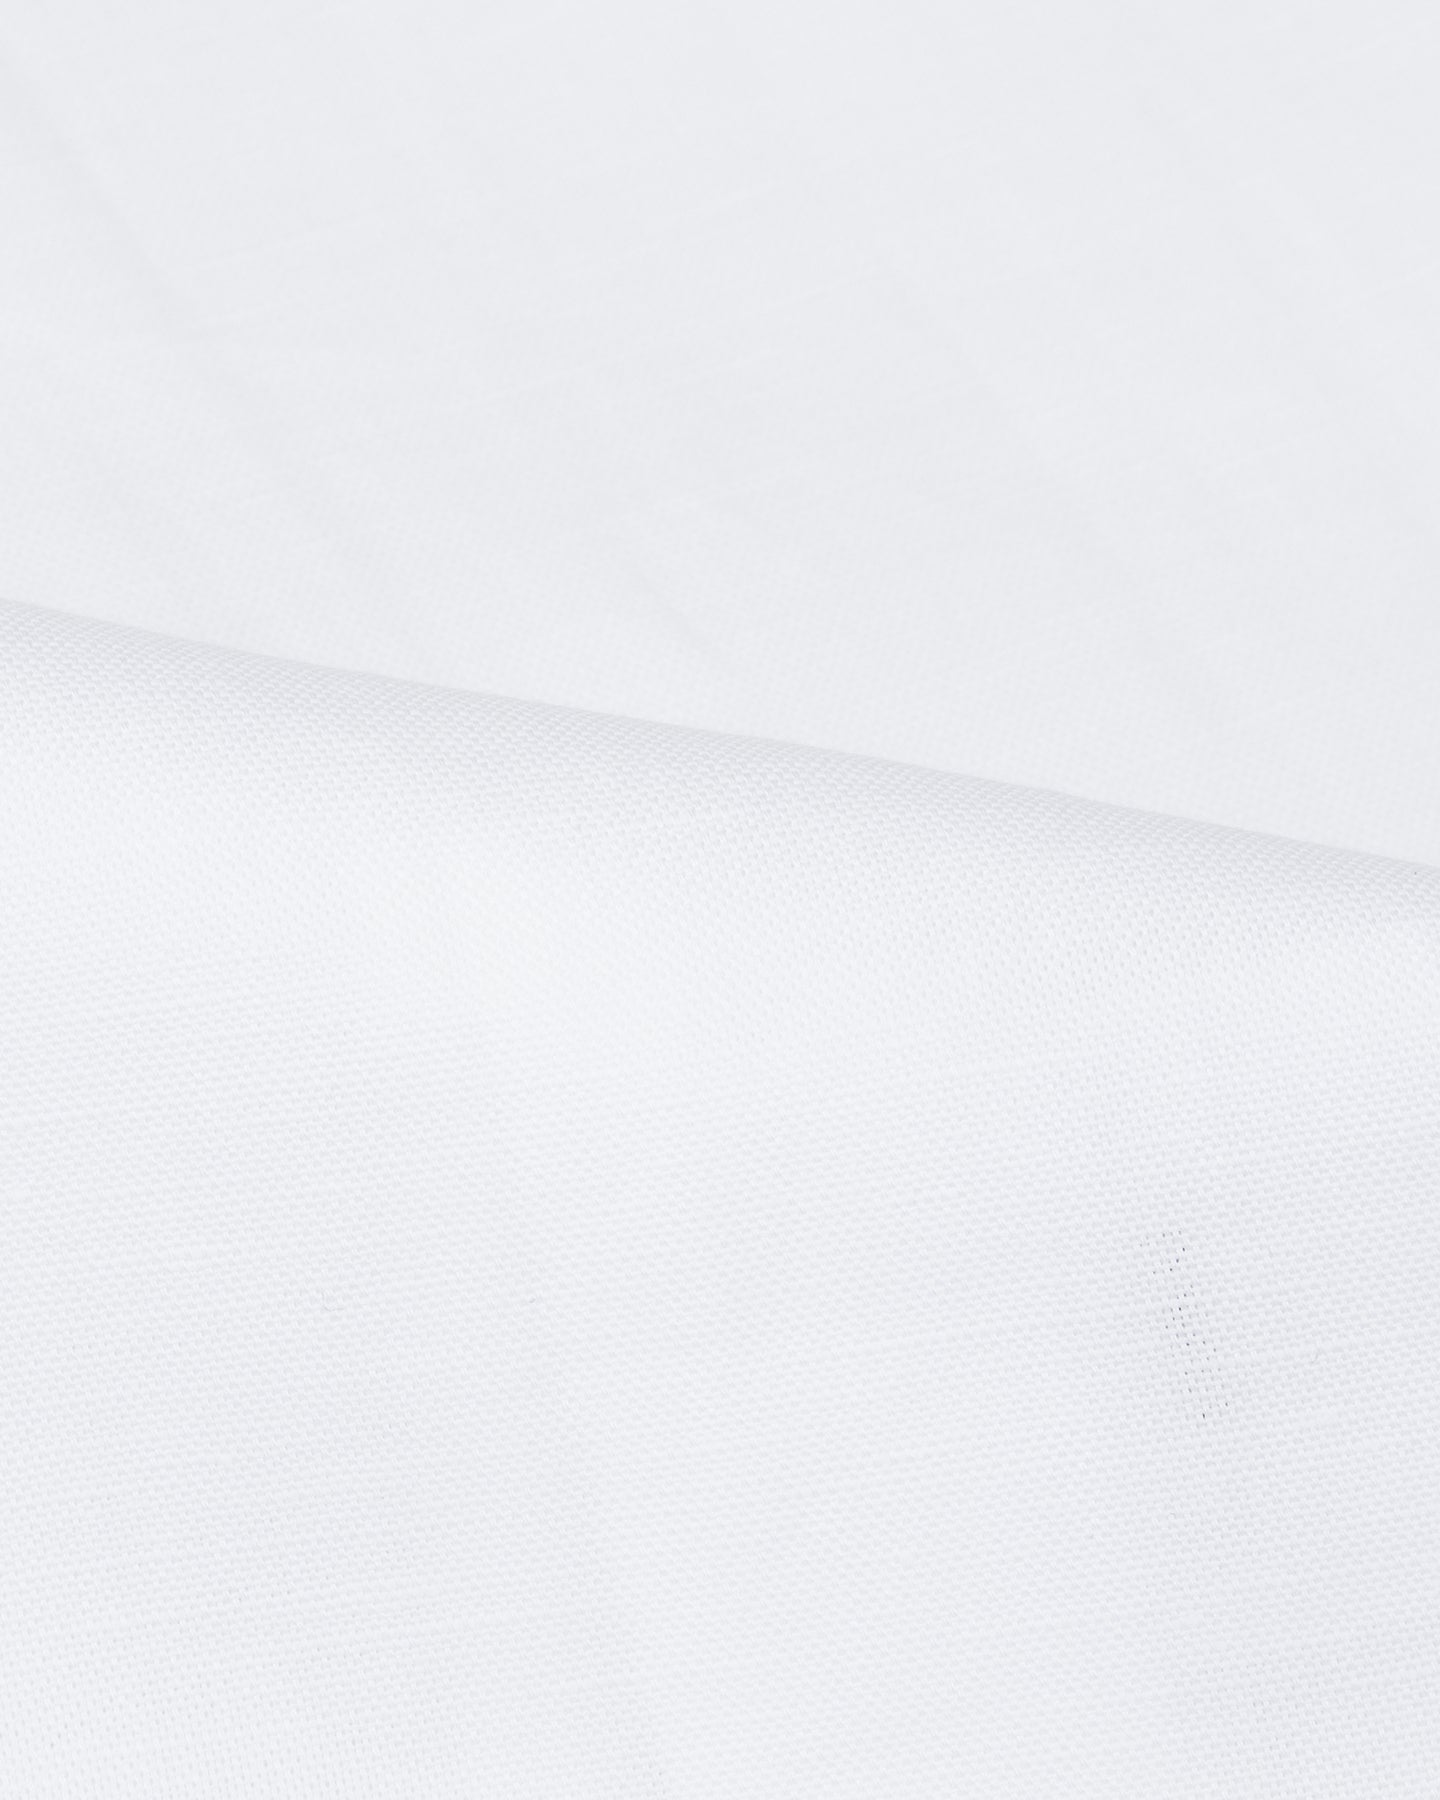 White cotton linen oxford shirt fabric